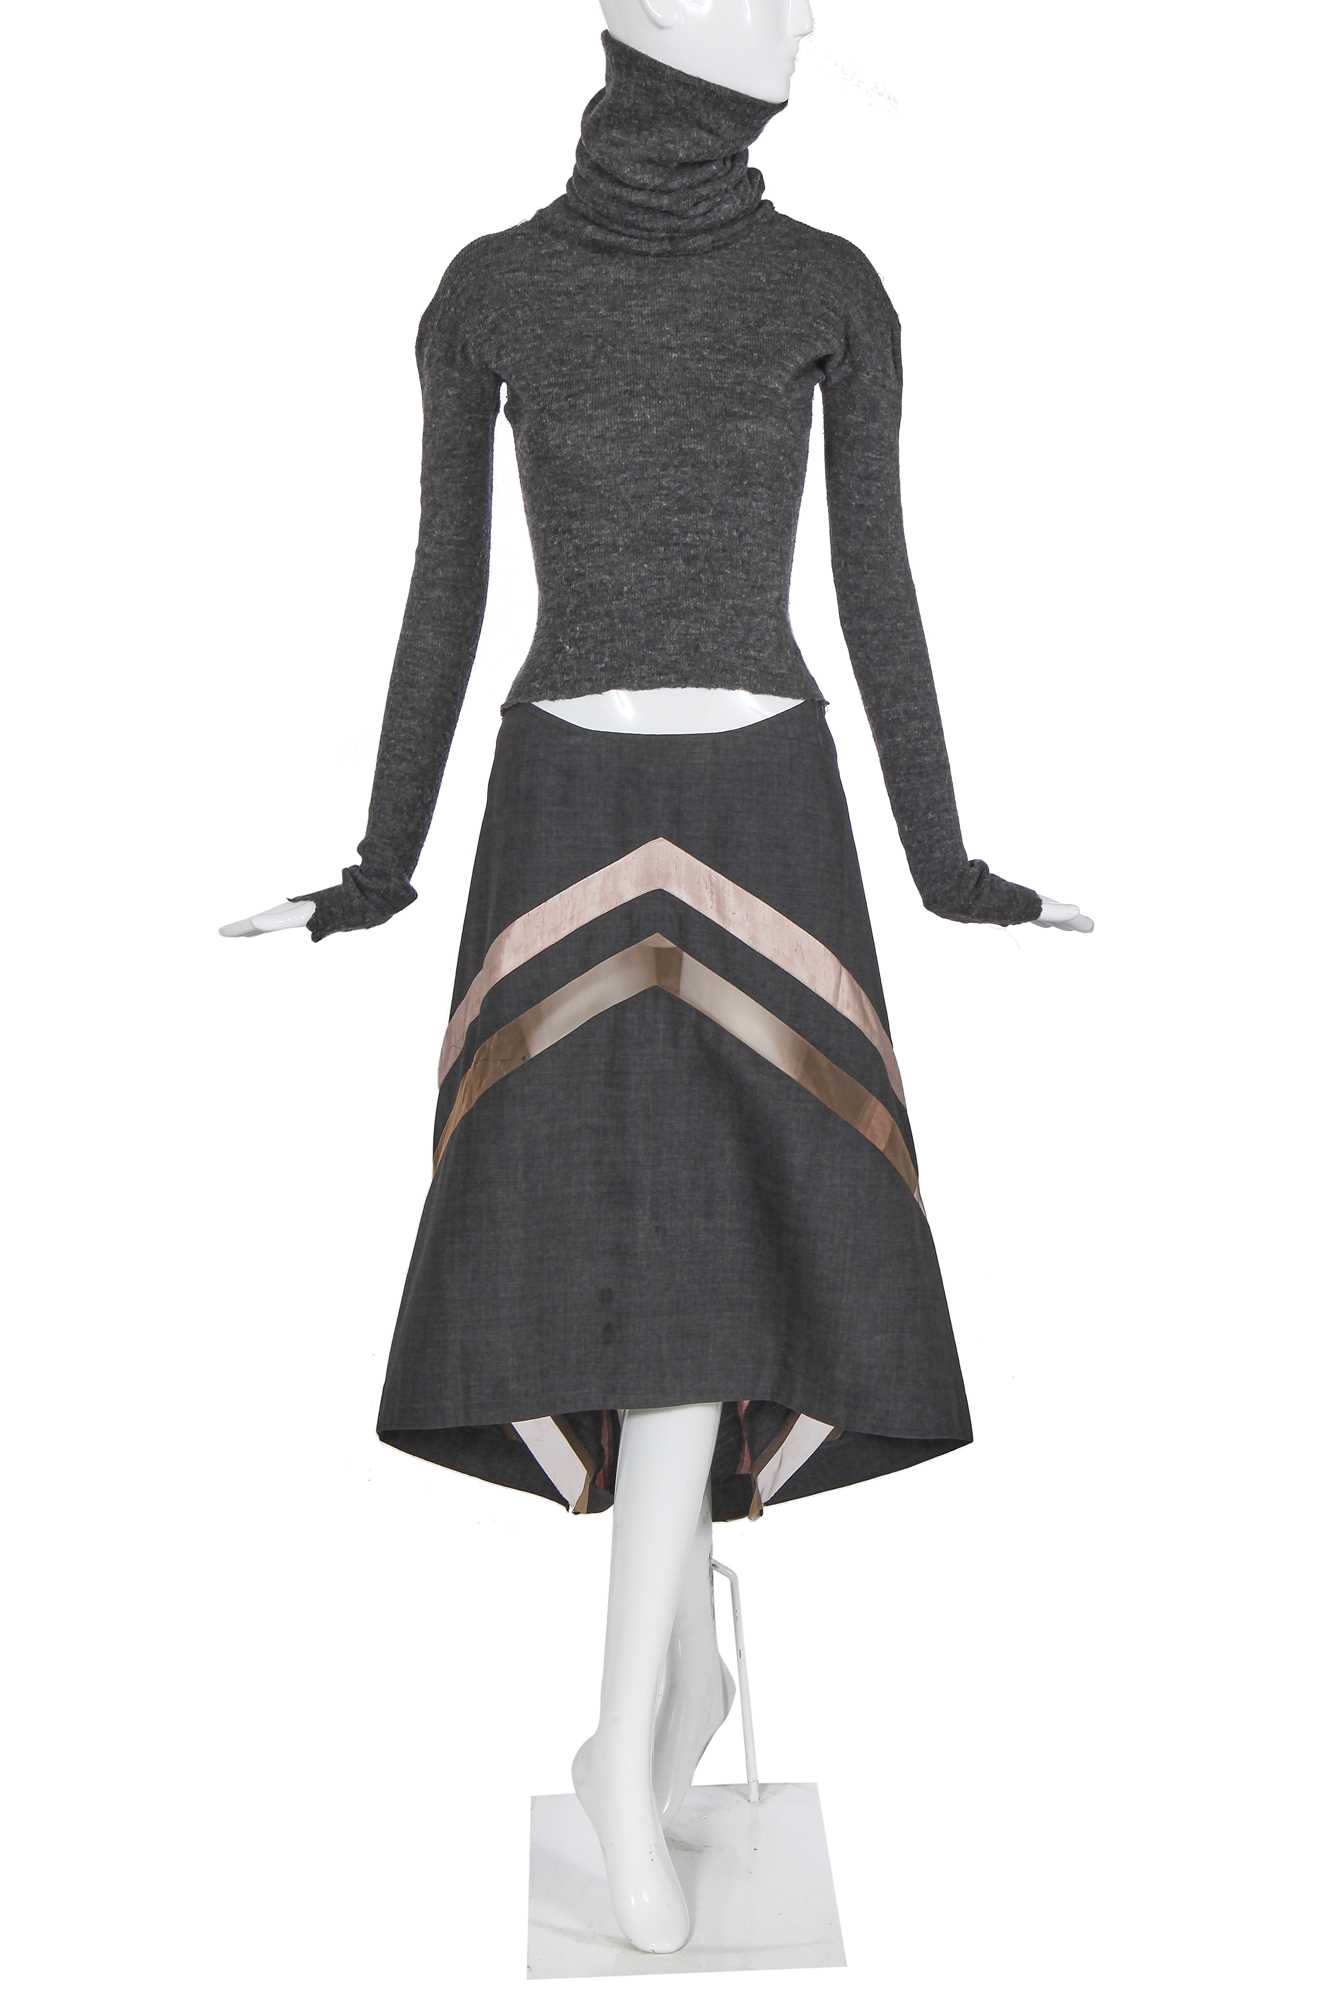 Lot 122 - A rare Alexander McQueen jumper and skirt ensemble, 'Dante' collection, Autumn-Winter 1996-97